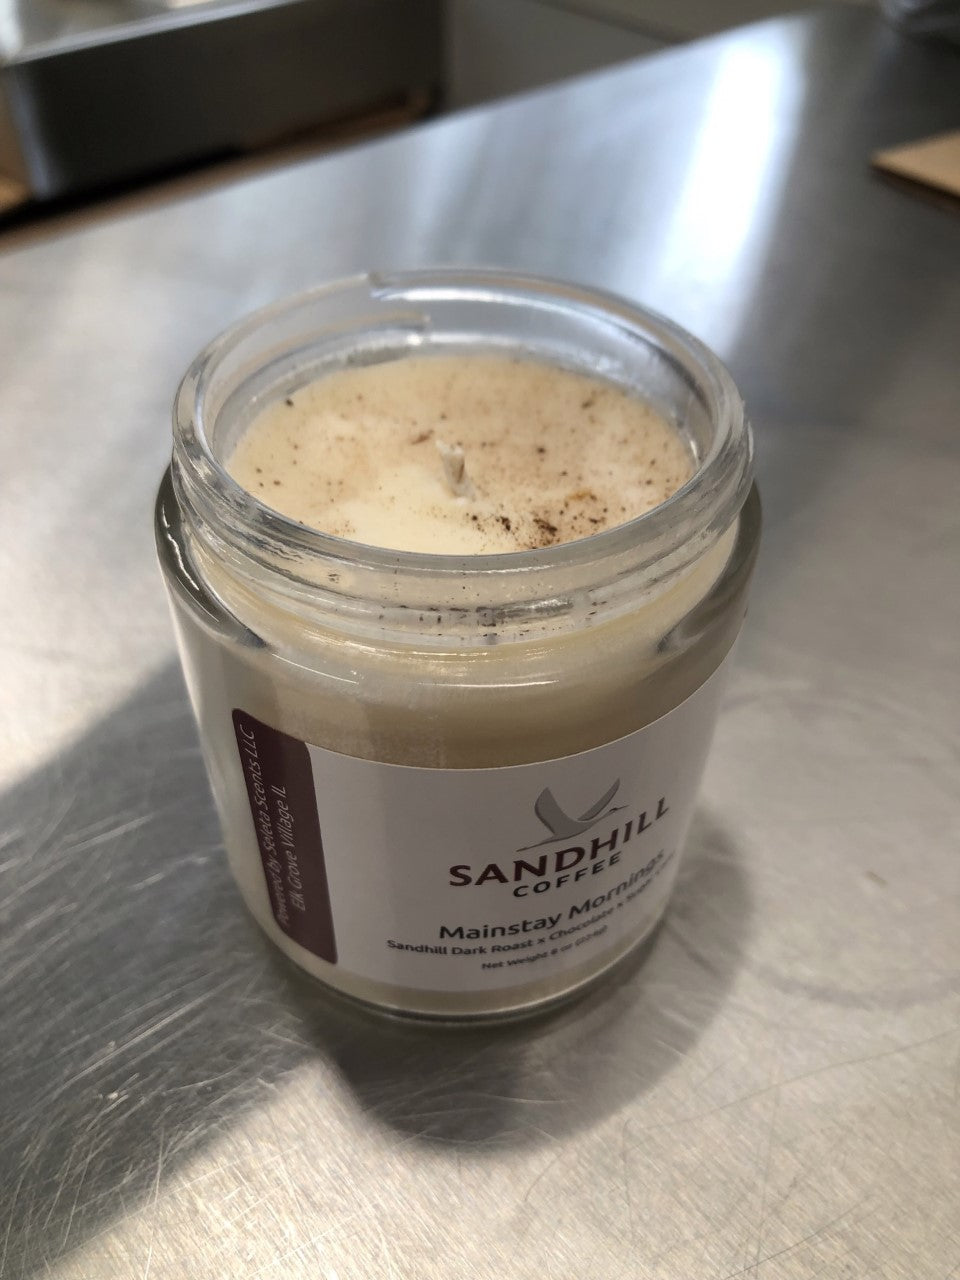 Sandhill Candle - sandhillcoffee